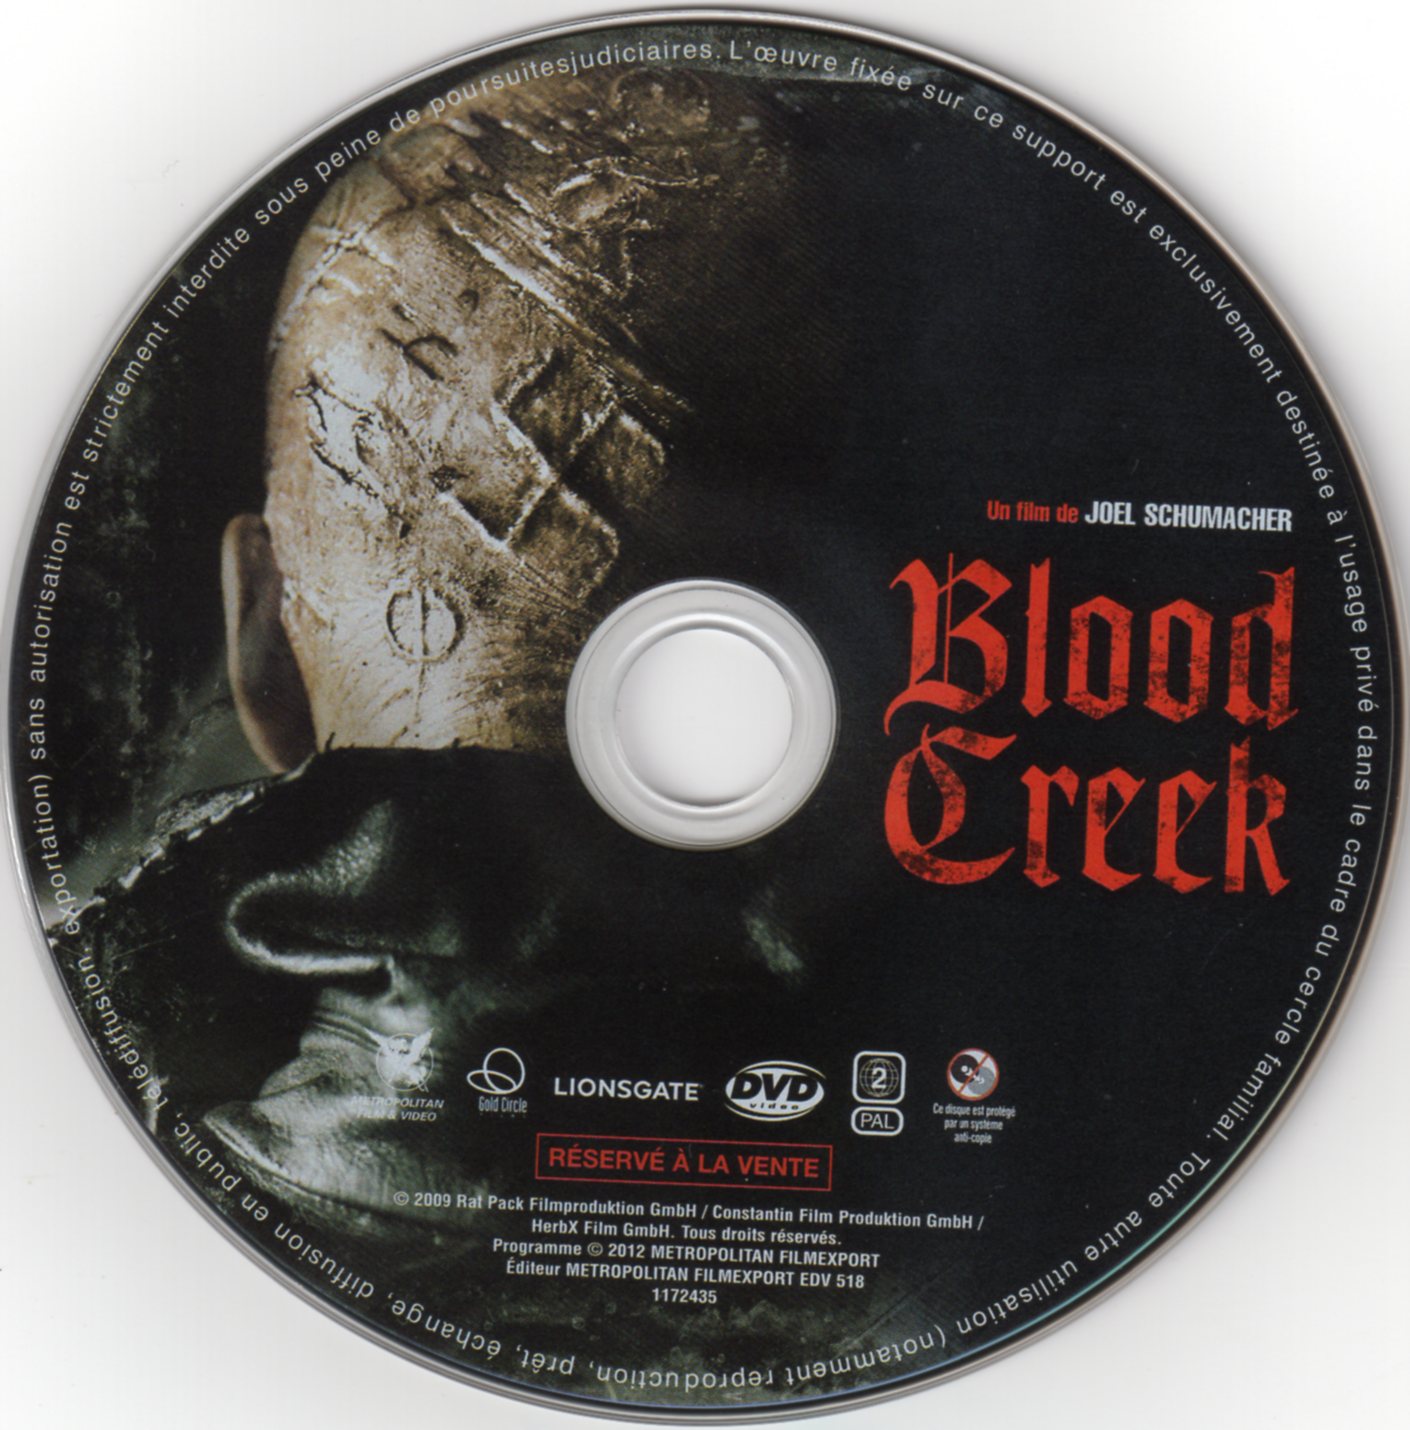 Blood creek